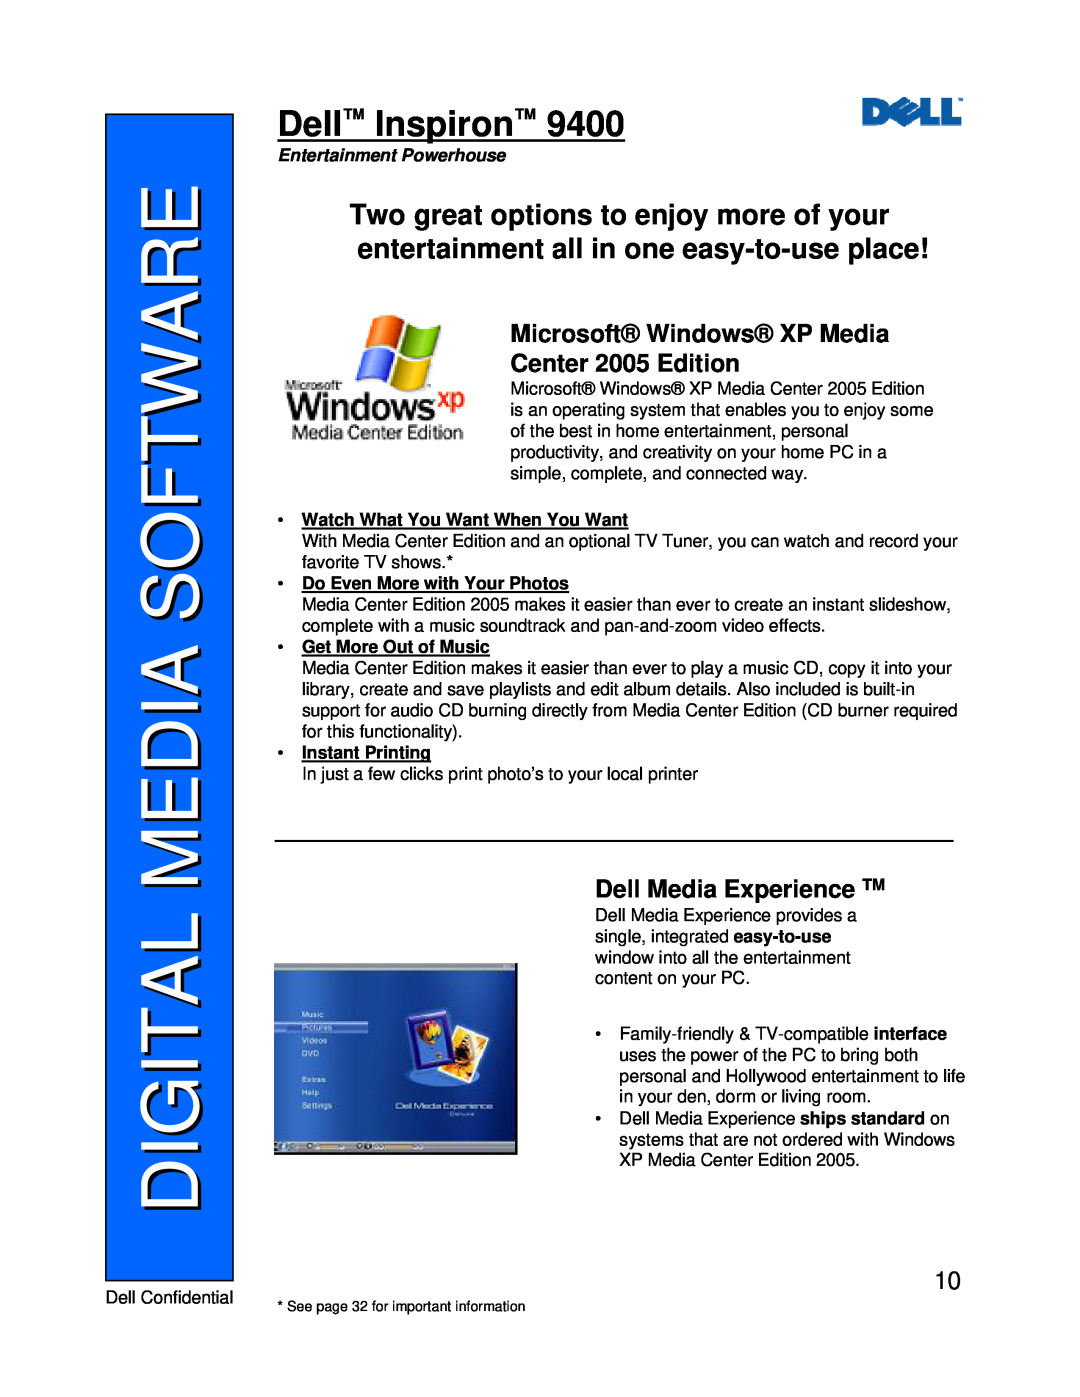 Dell 9400 Digital Media Software, Dell Inspiron, Microsoft Windows XP Media Center 2005 Edition, Dell Media Experience TM 